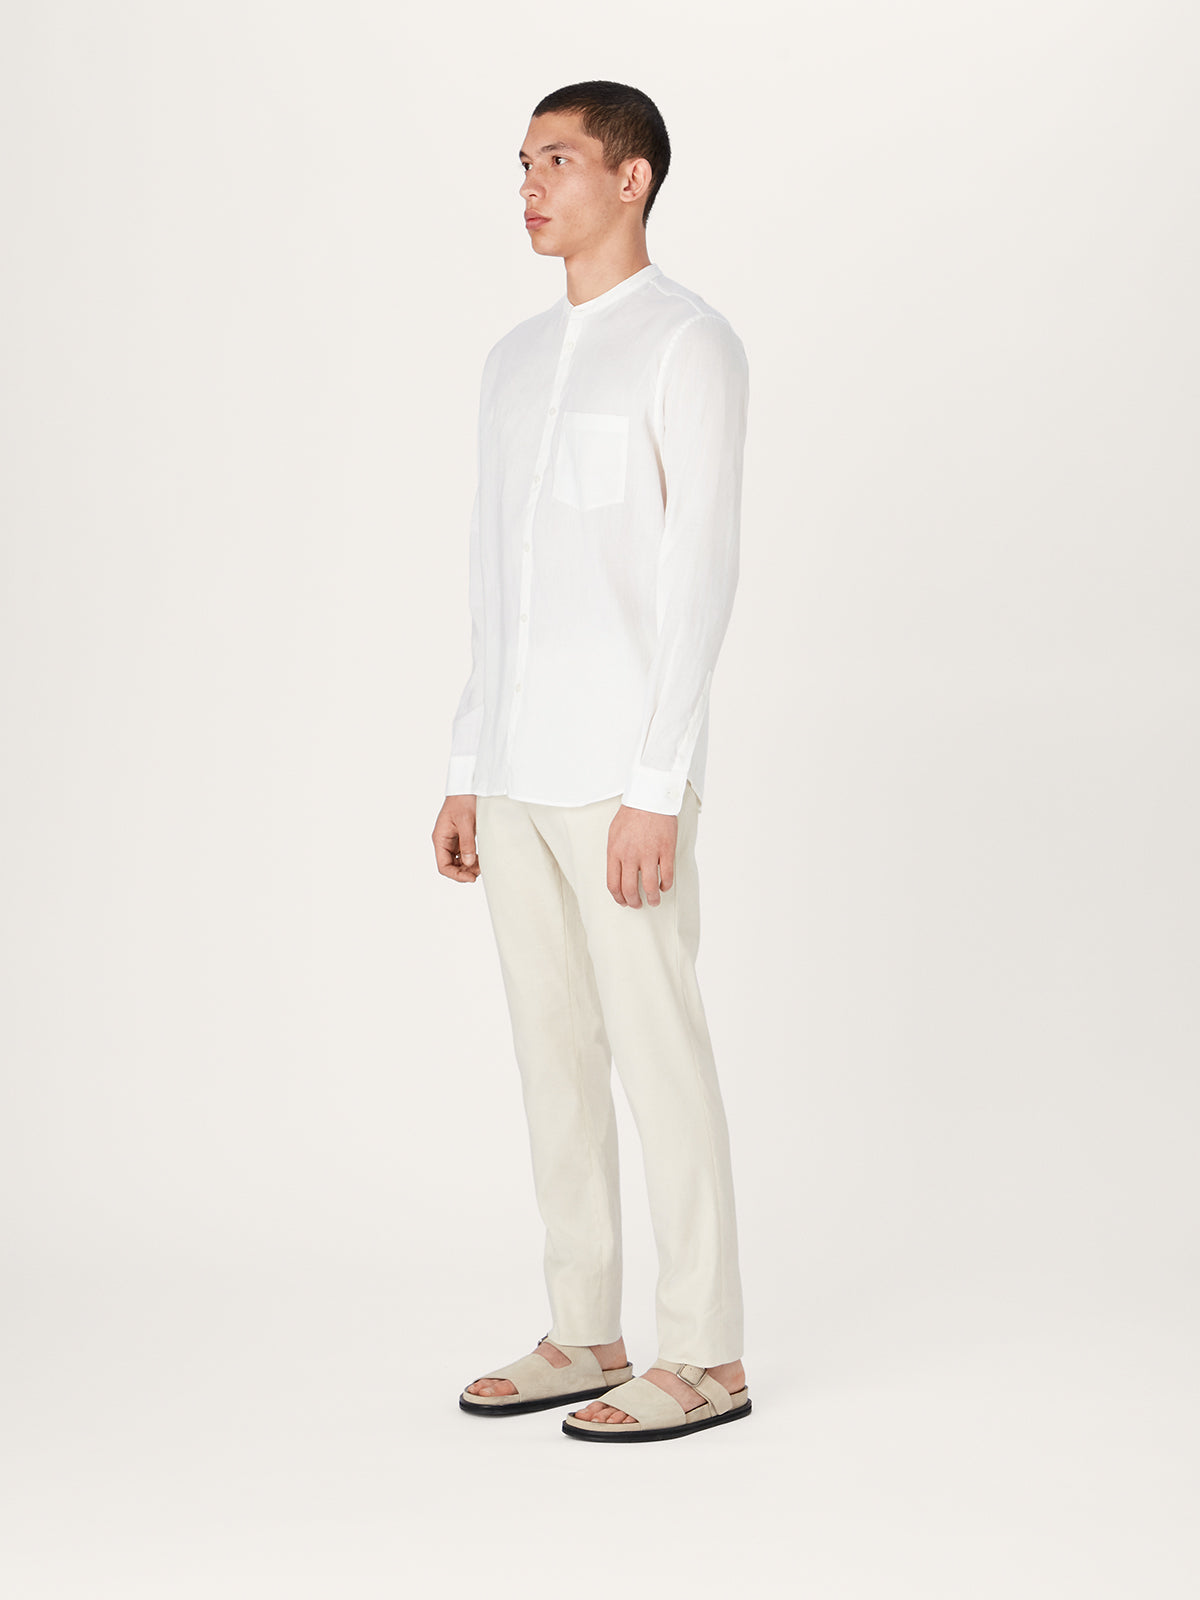 The All Day Shirt Linen Collarless || Off White | Linen